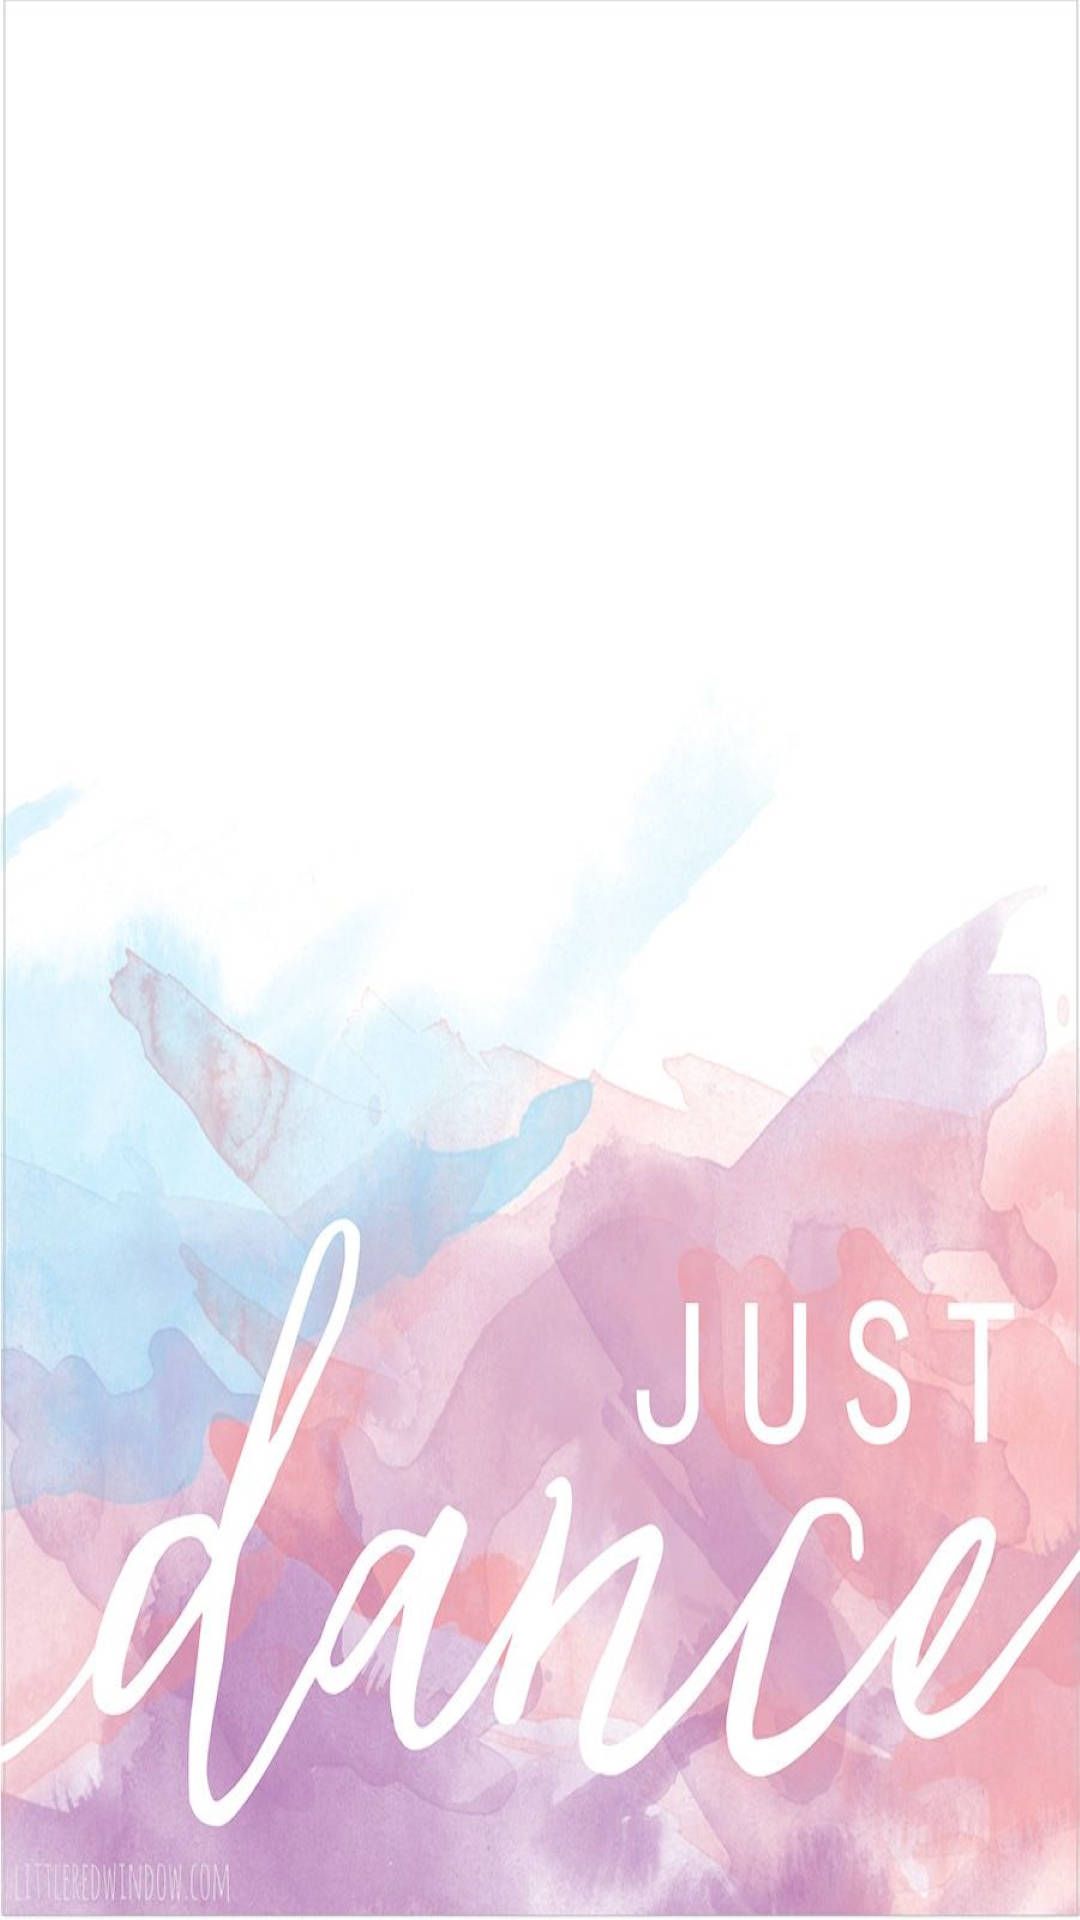 Download Just Dance Aesthetic Poster Wallpaper